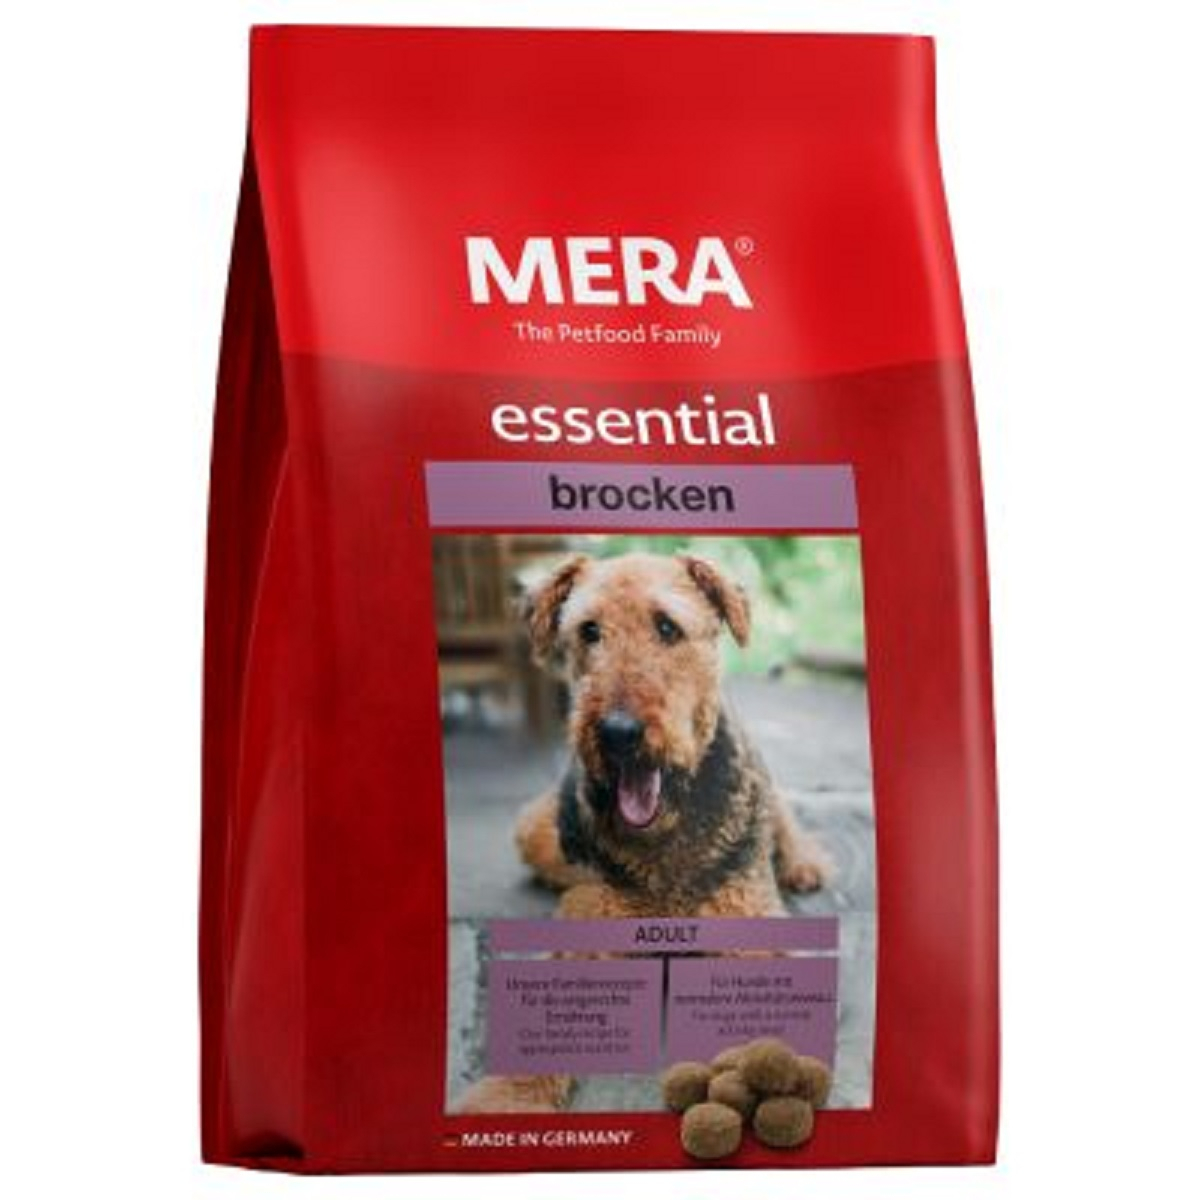 MERA Essential Brocken Adult Dog